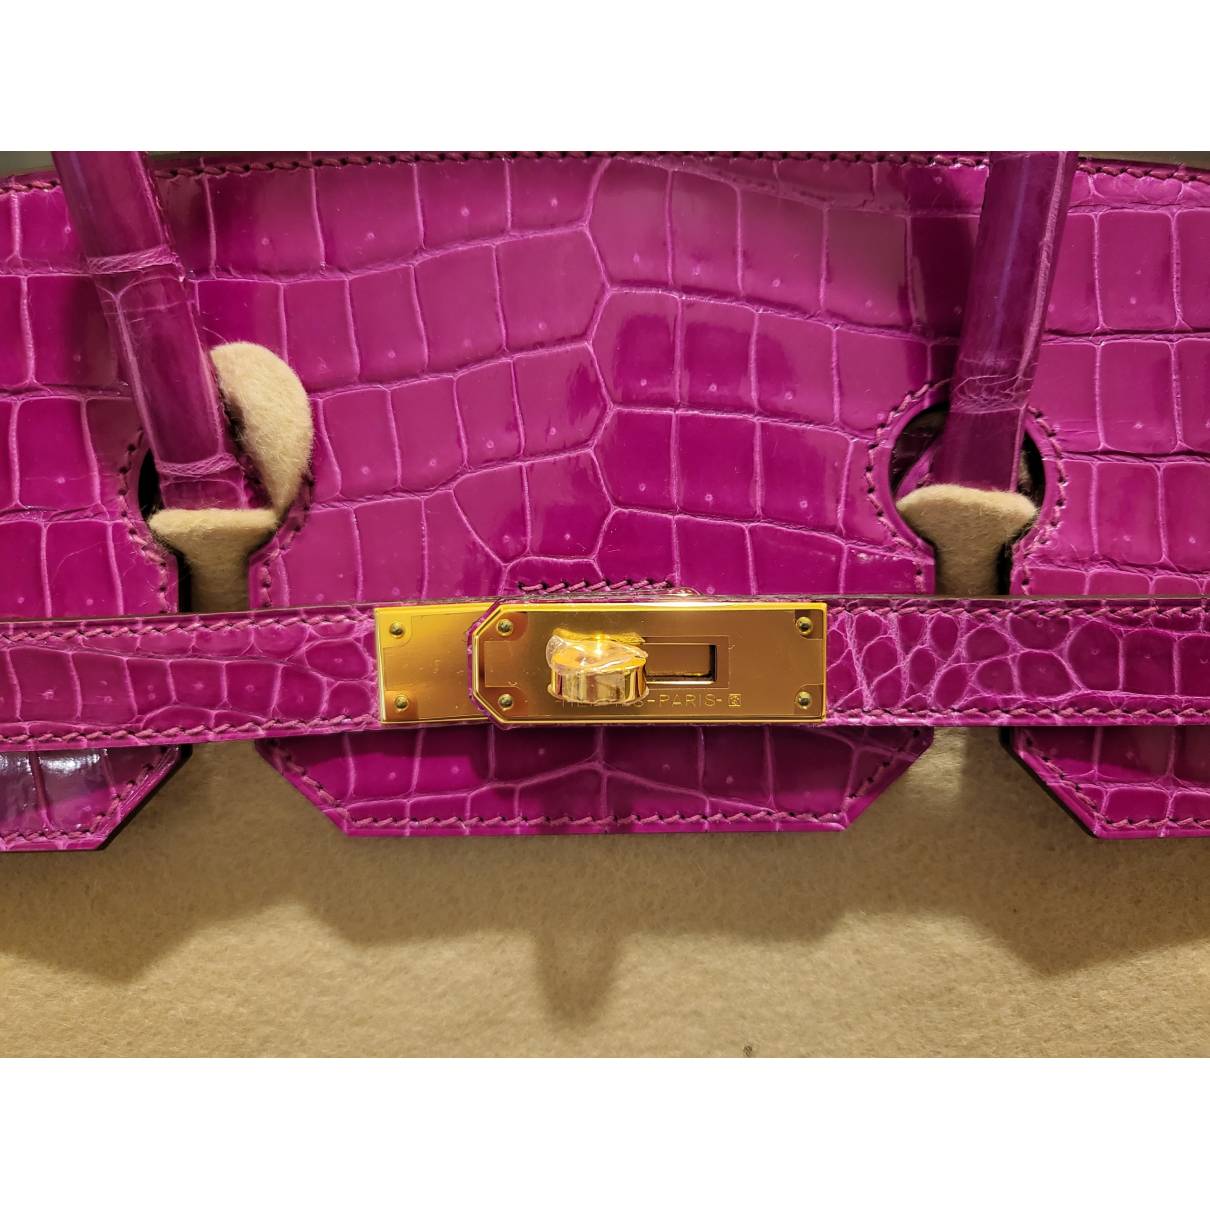 Birkin 35 crocodile handbag Hermès Red in Crocodile - 31576634